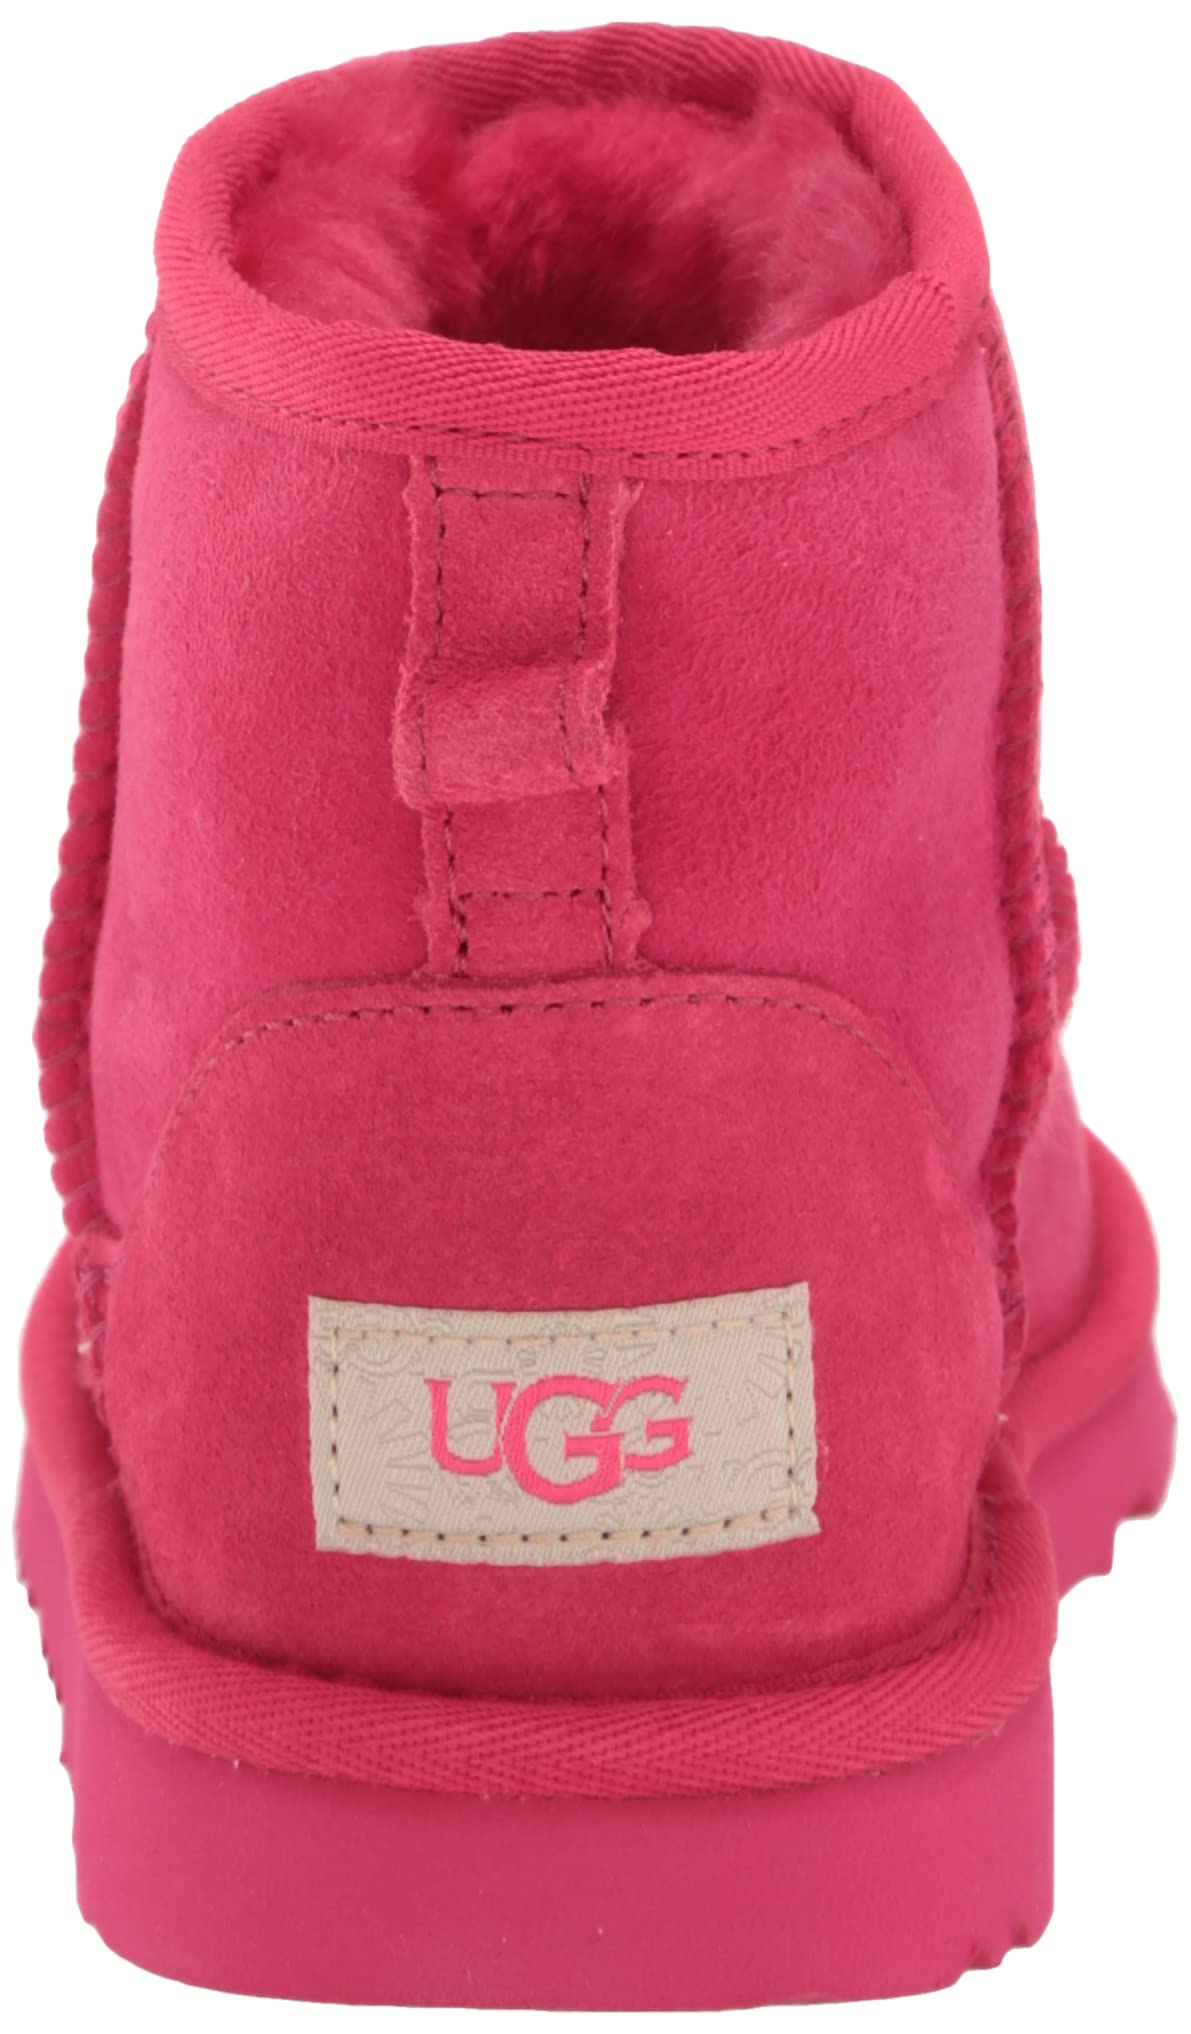 UGG Unisex-Child Kids' Classic Mini Ii Fashion Boot